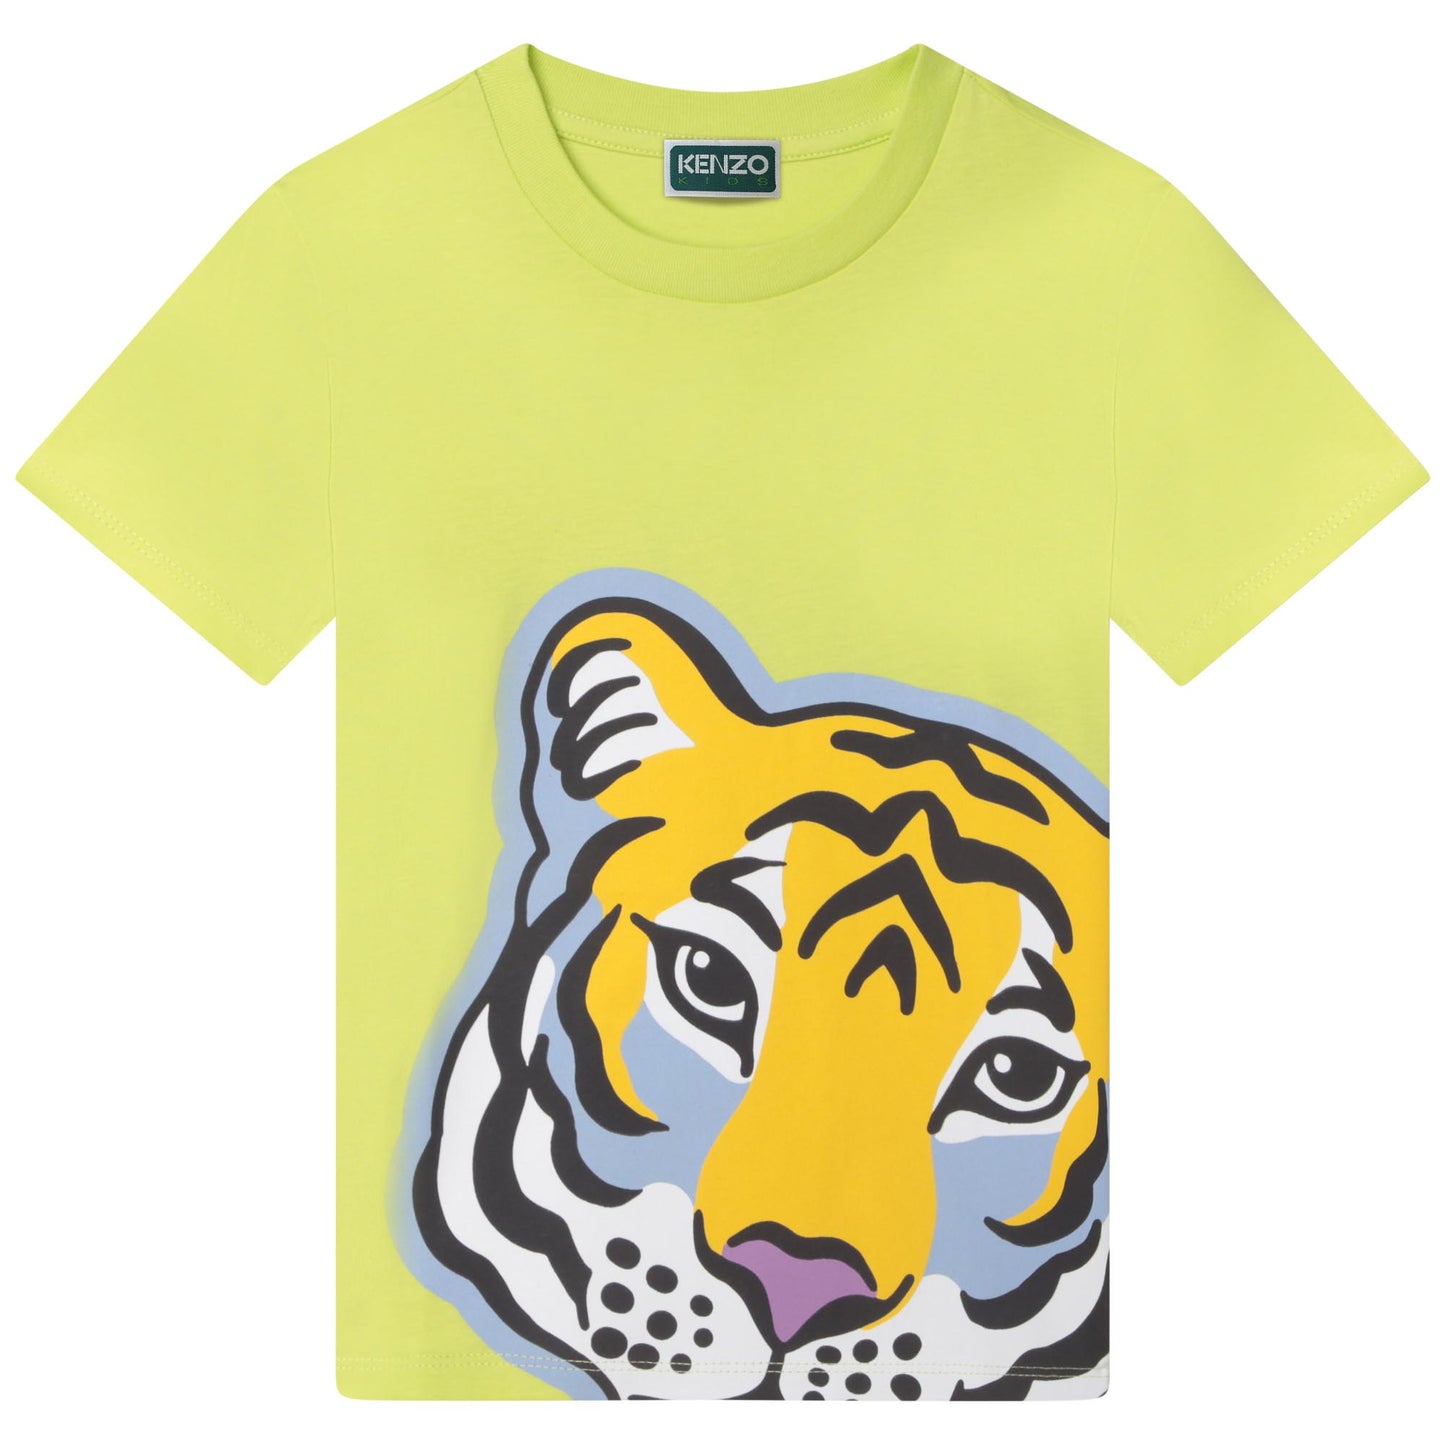 Kenzo Short Sleeved Tee Shirt w/ Colorful Tiger Print